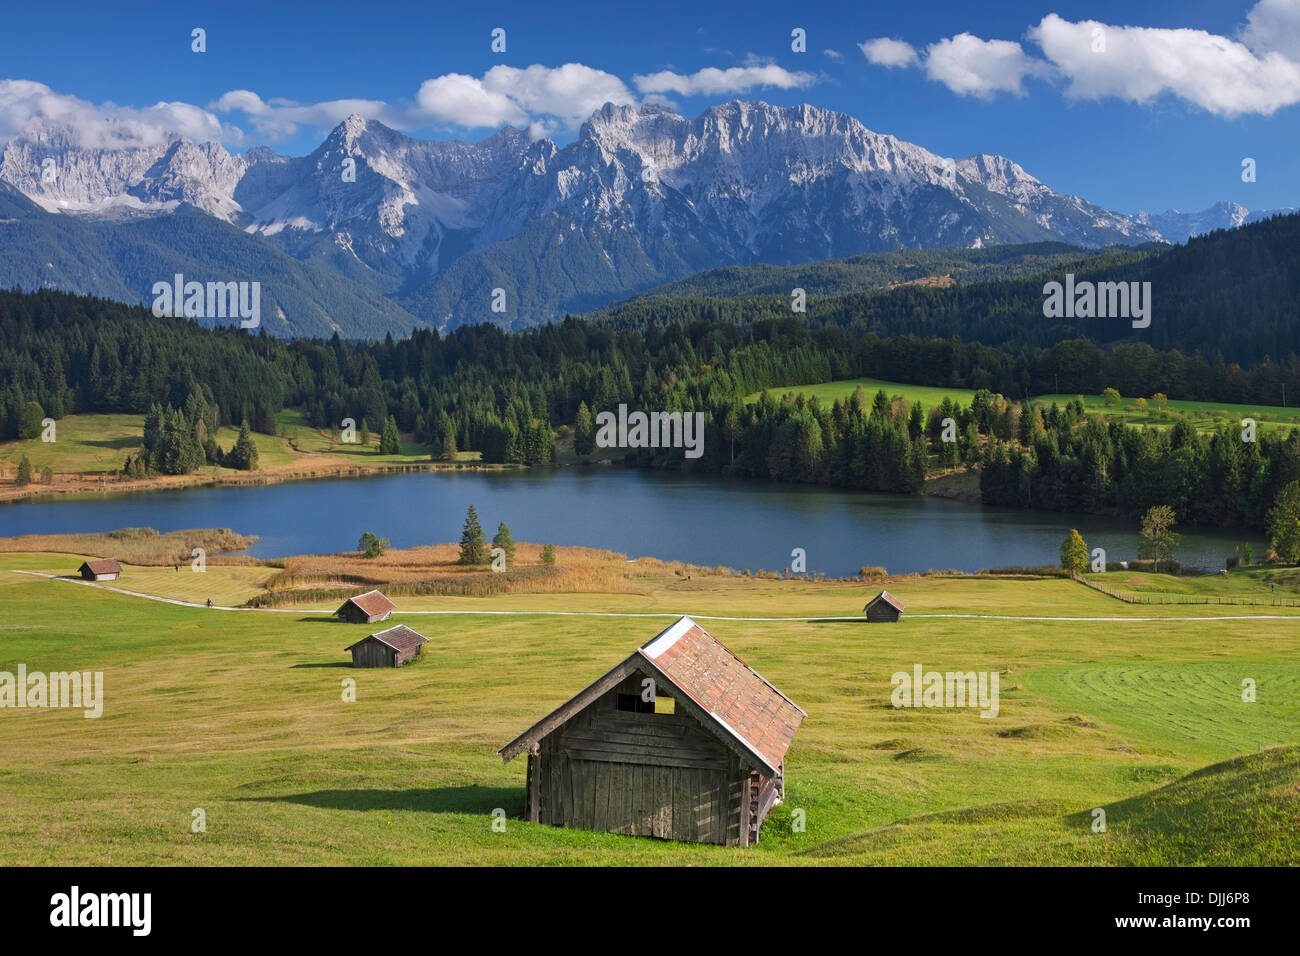 The Karwendel Mountain Range and huts along lake Gerold / Geroldsee near Mittenwald, Upper Bavaria, Germany Stock Photo